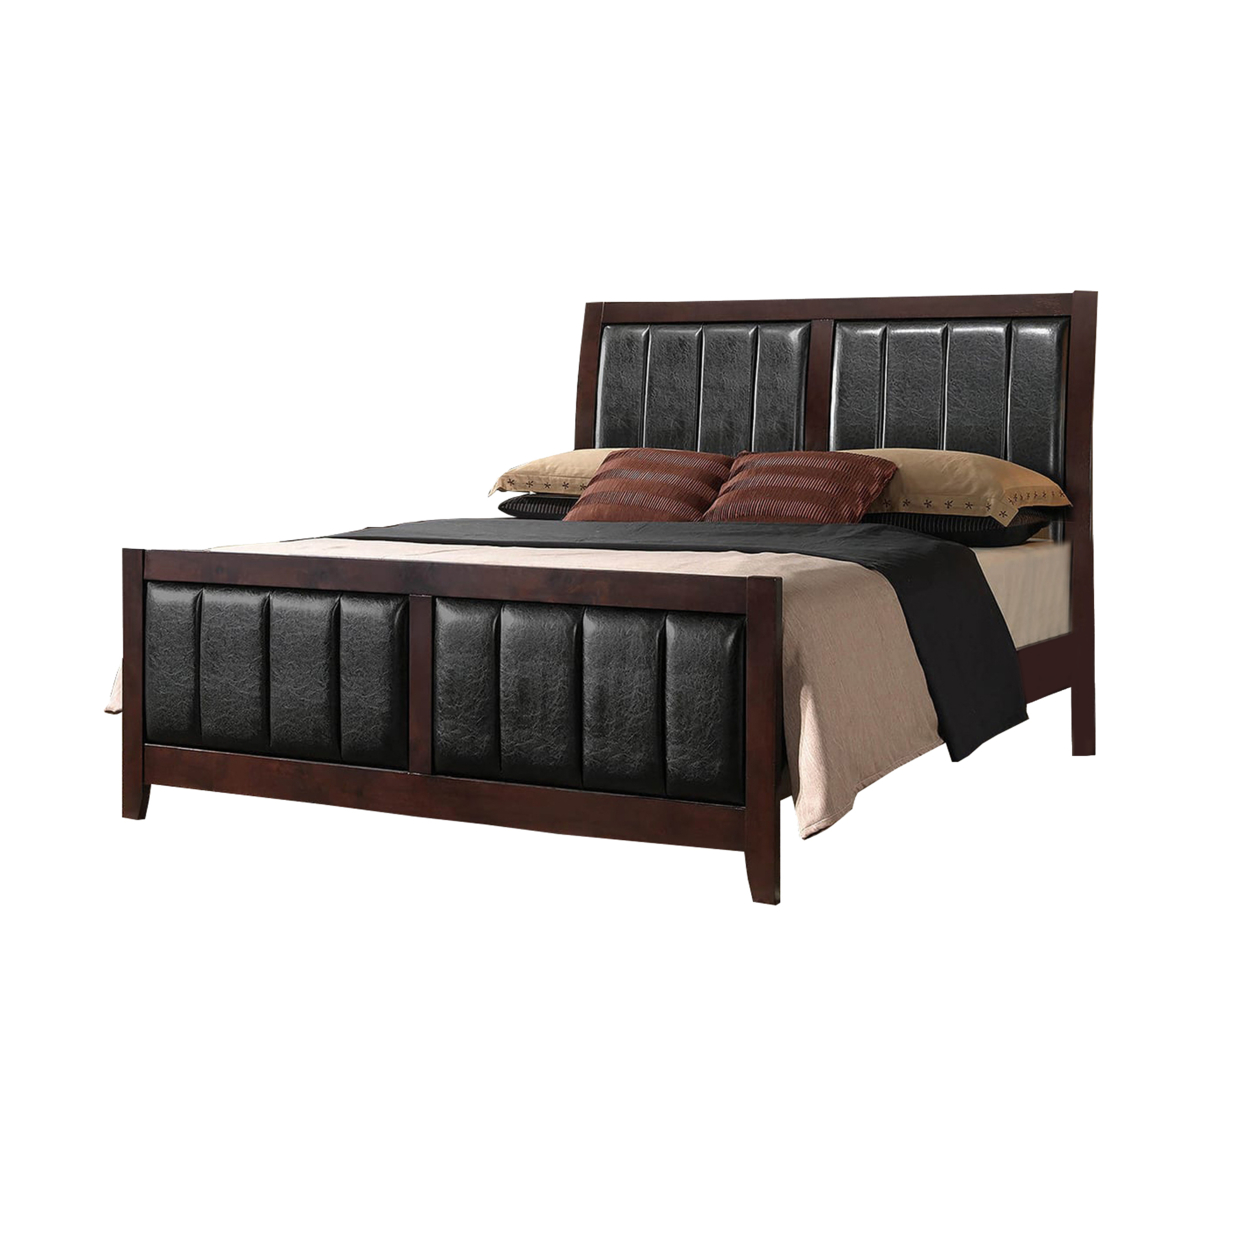 Leatherette Upholstered Wooden Eastern King Bed, Brown And Black- Saltoro Sherpi